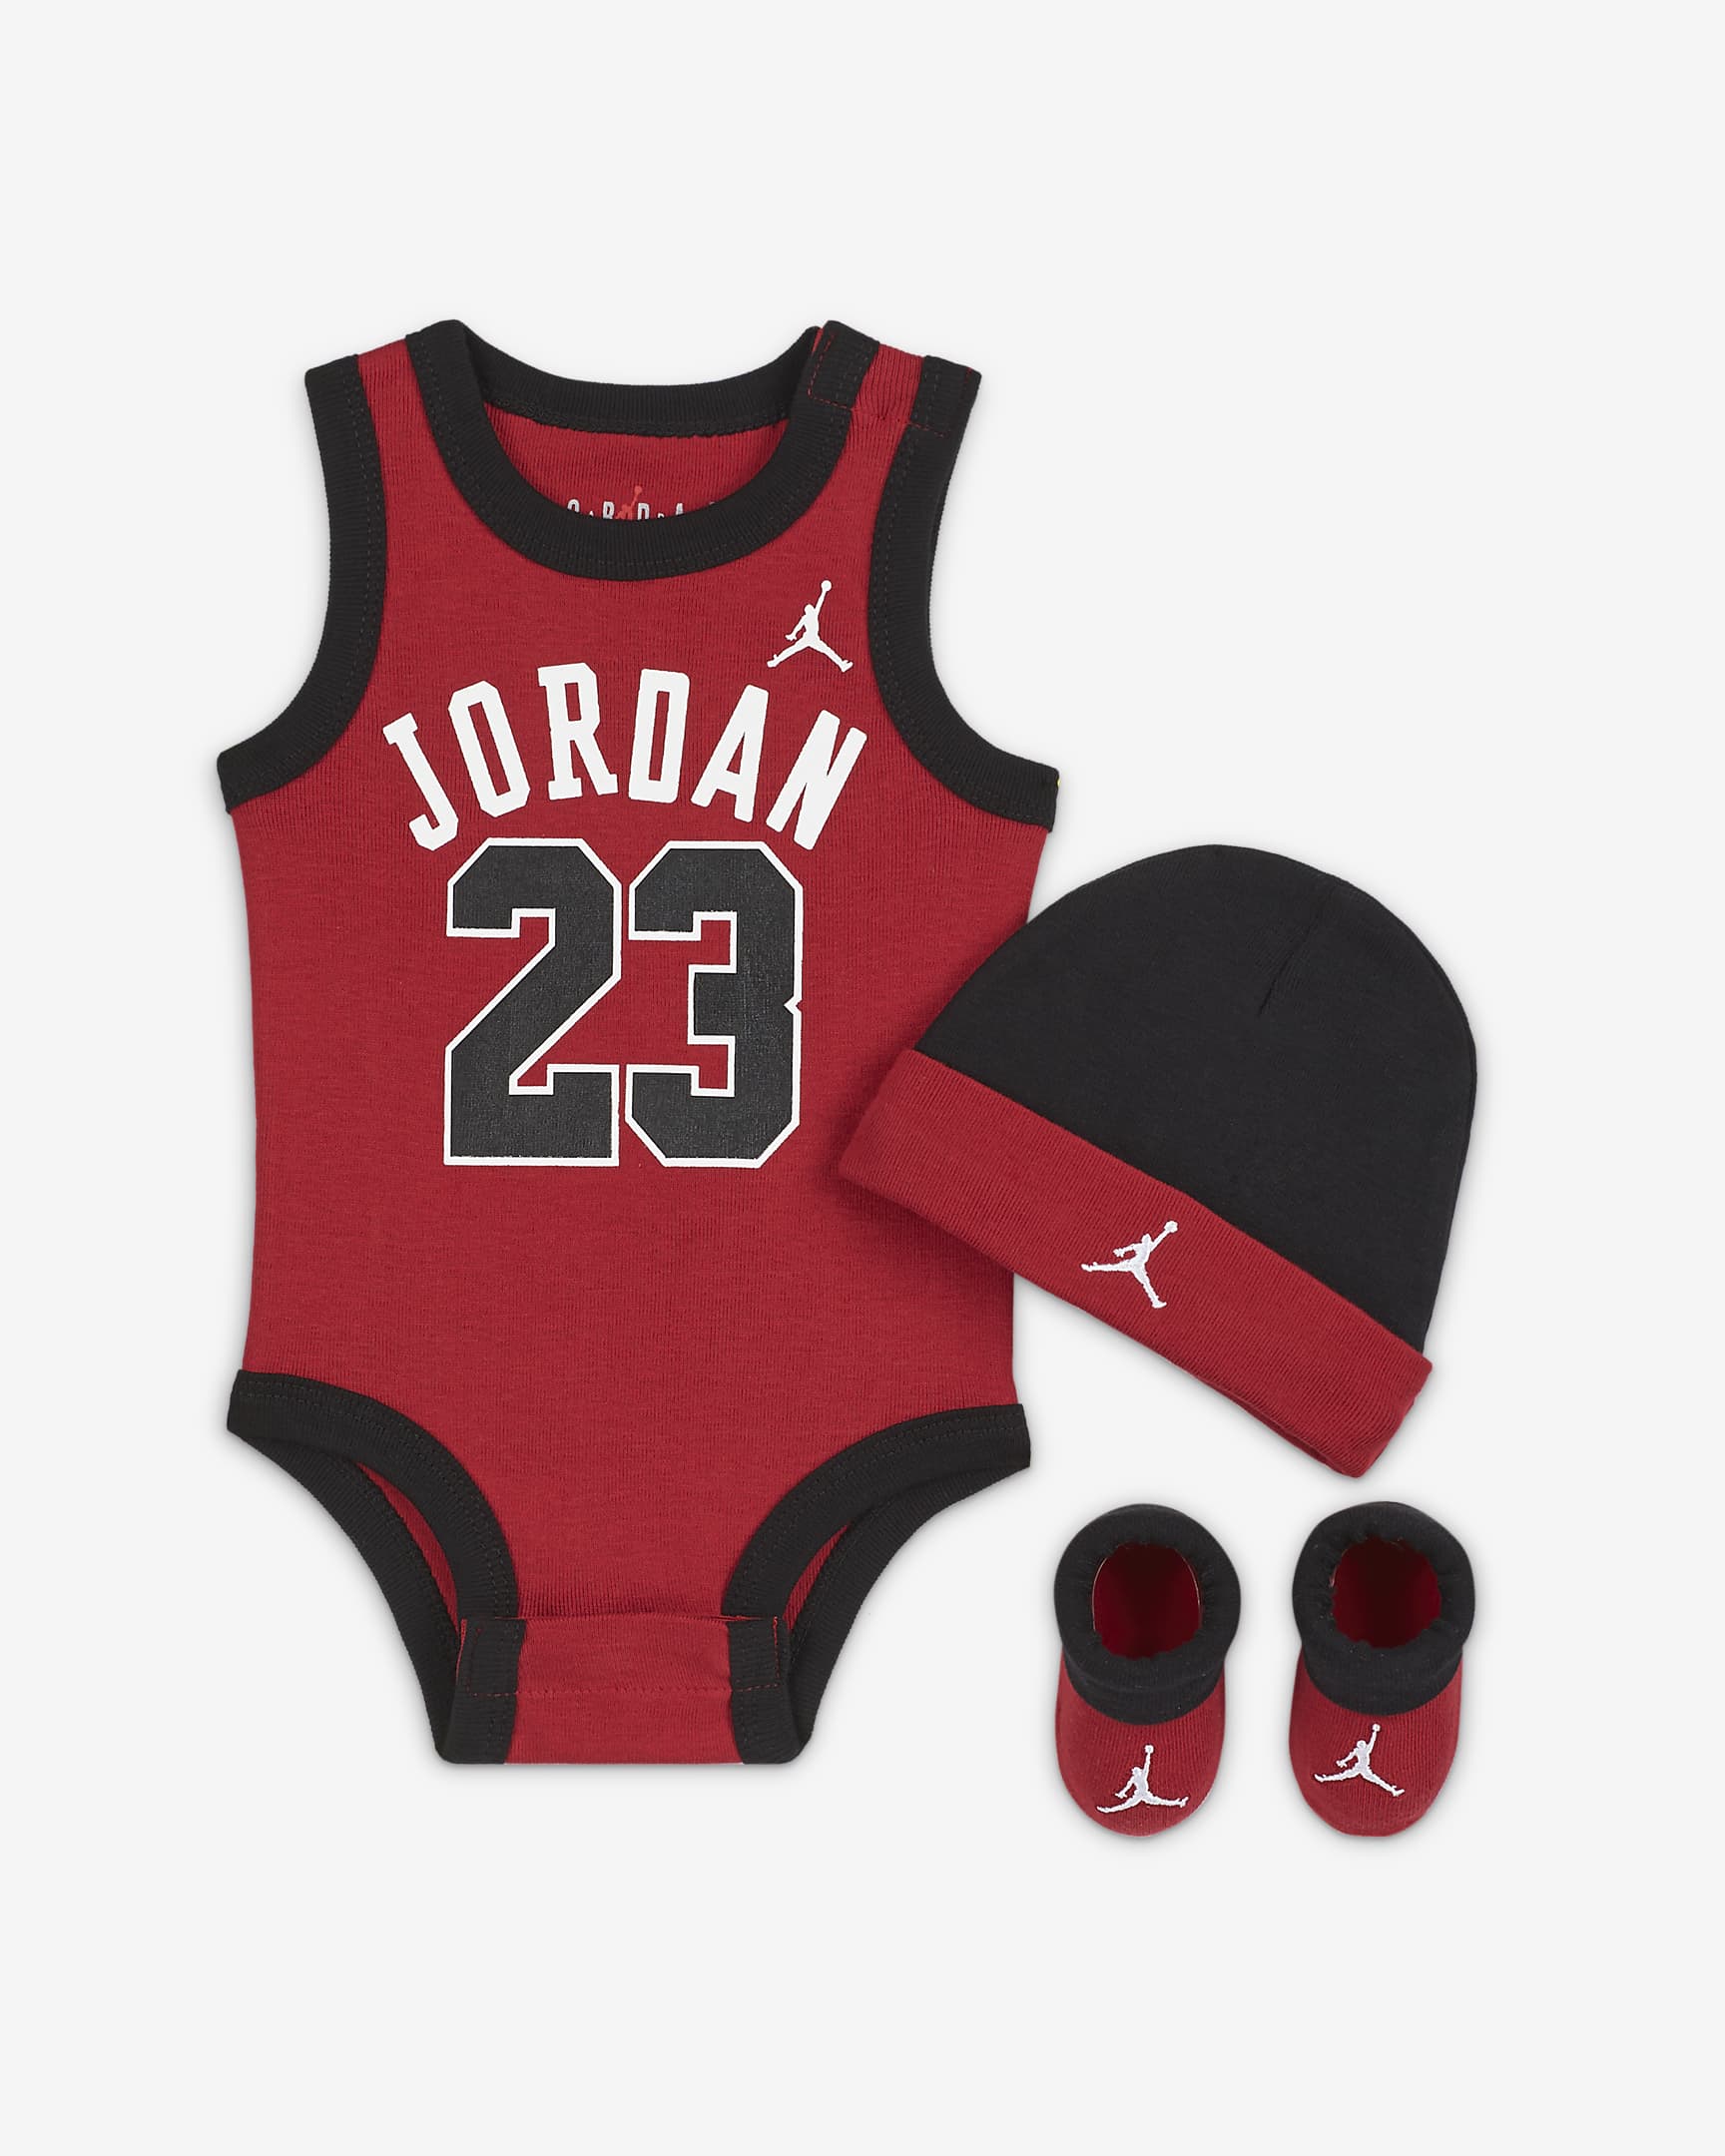 Jordan coffret cadeau baby 